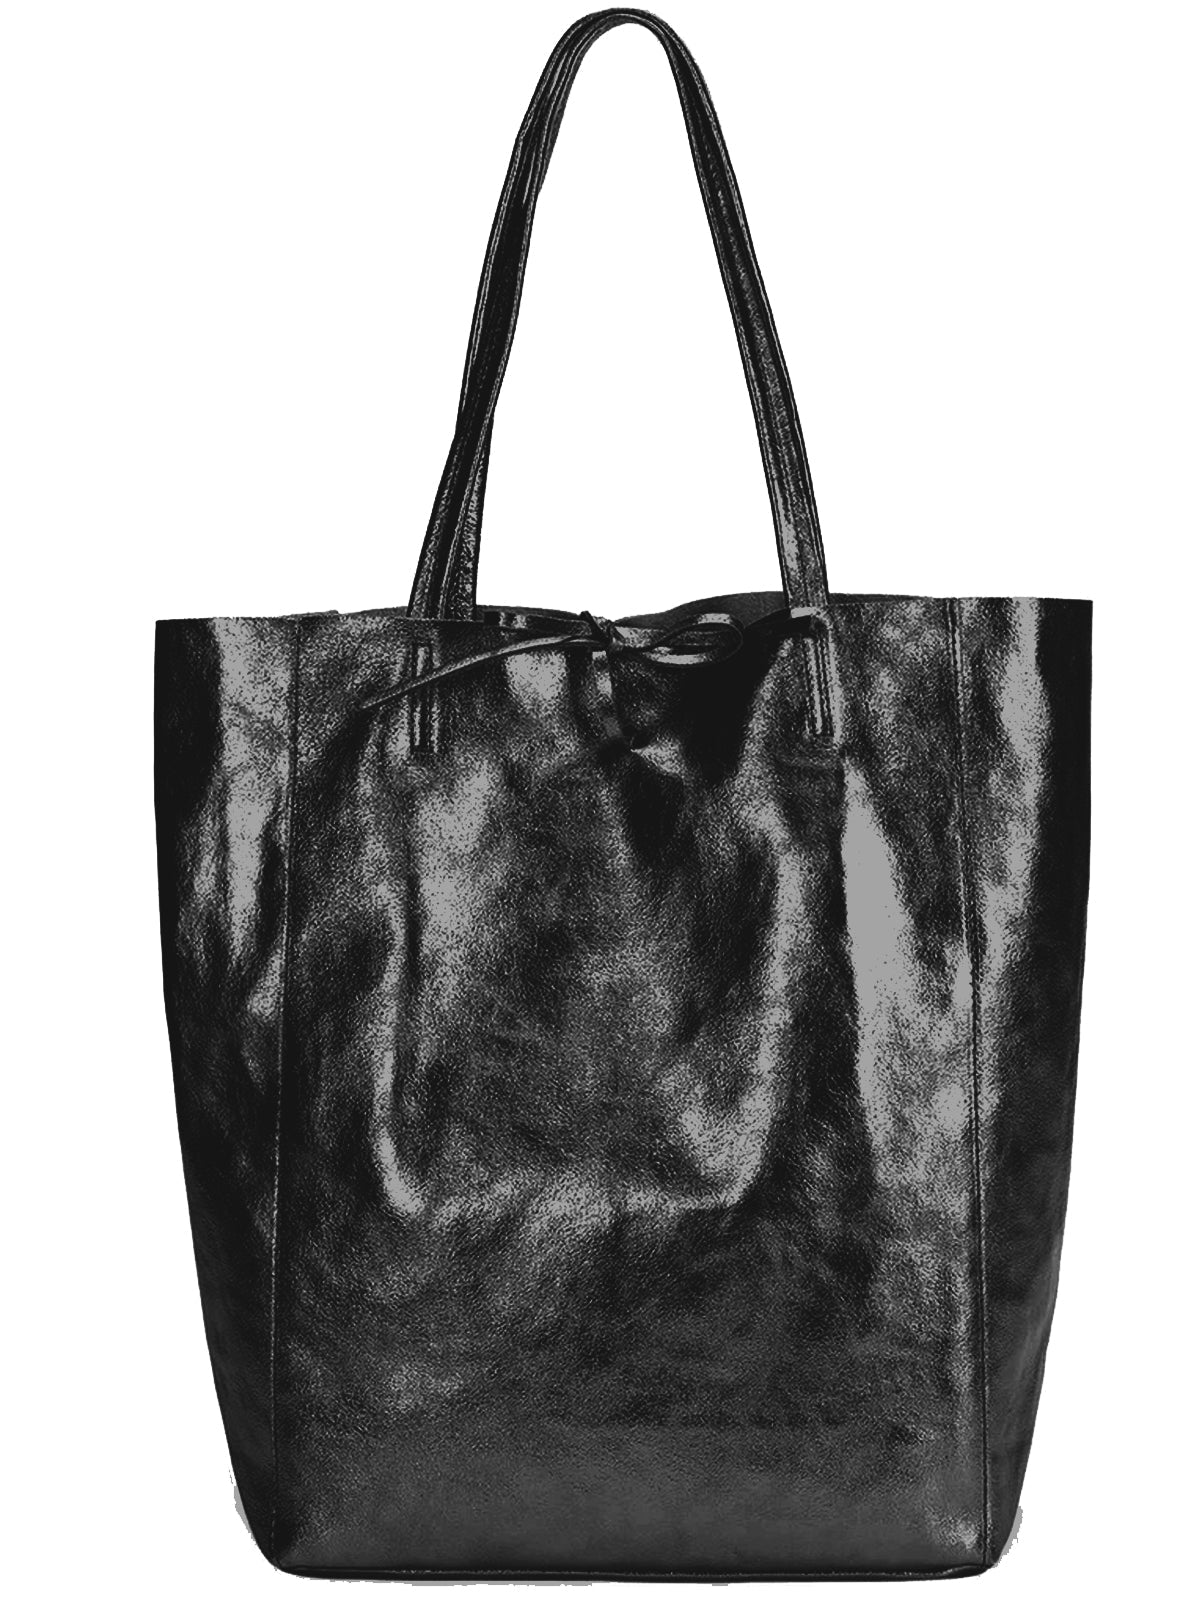 Black Metallic Leather Tote Shopper Bag